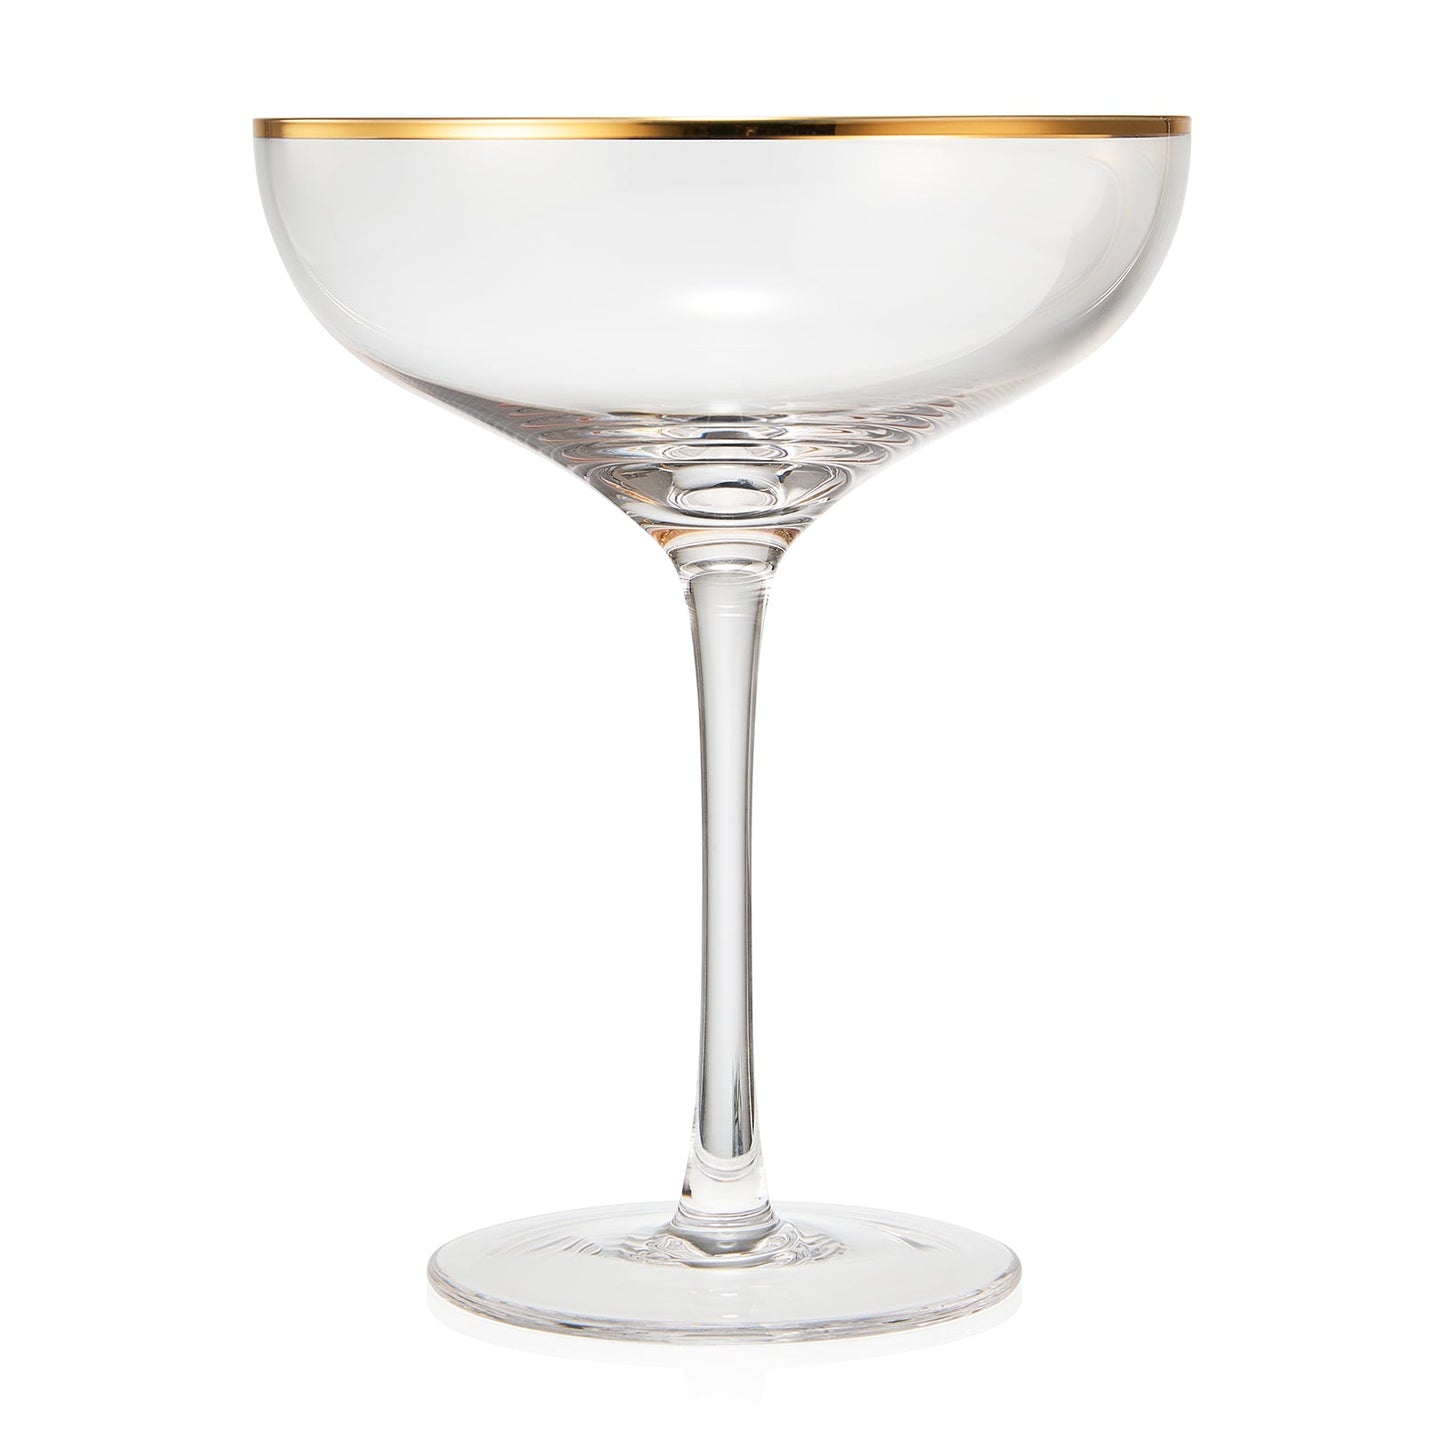 The Wine Savant - Crystal Gilded Rim Coupe Glasses - Set of 2 - 9oz